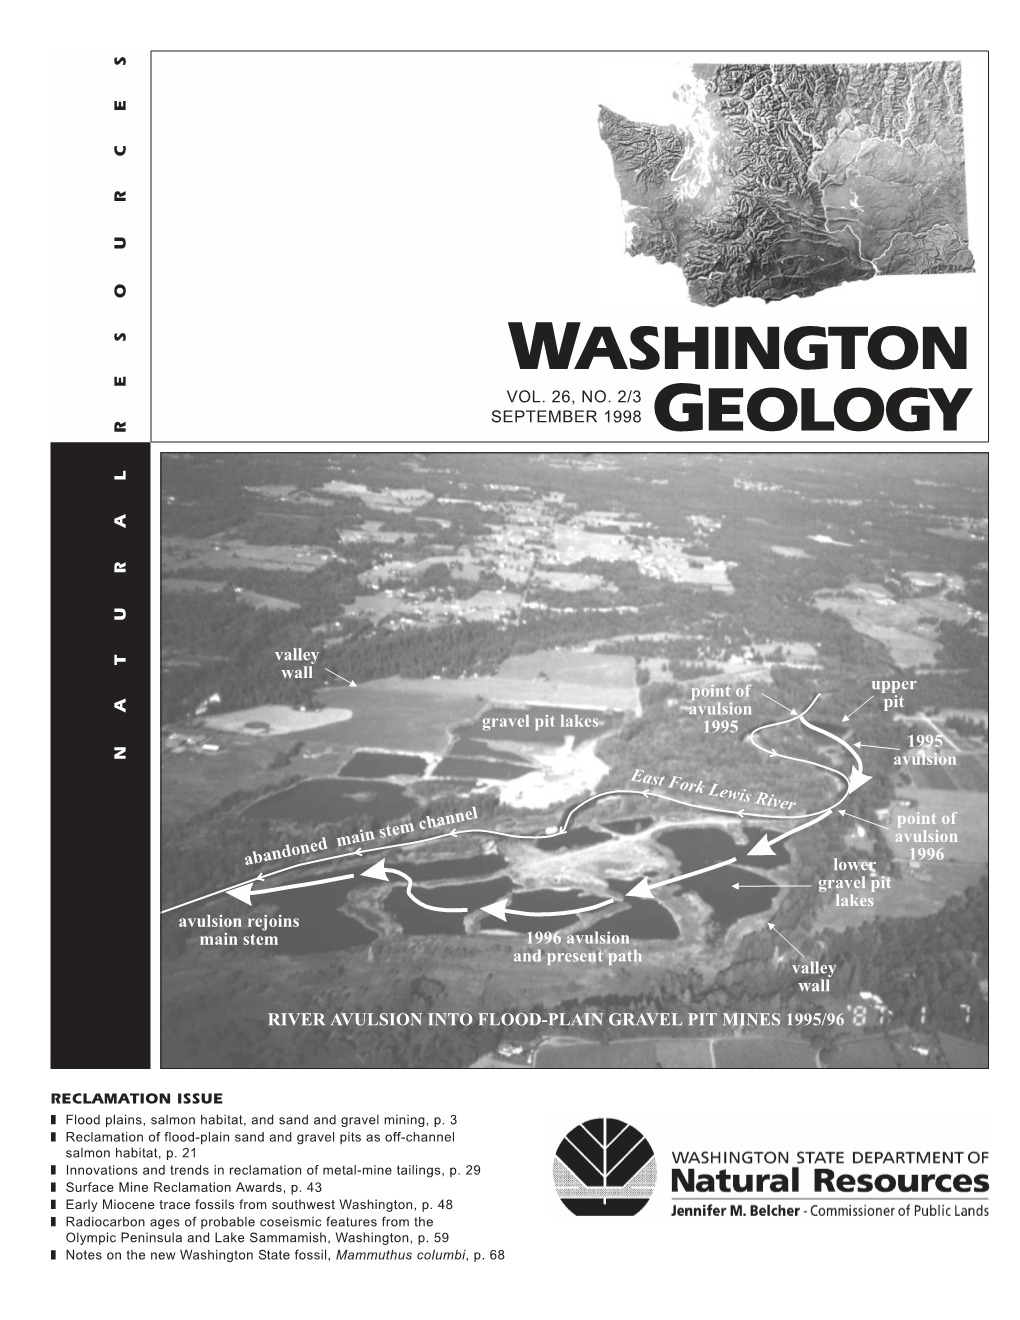 Washington Geology, September 1998, Vol. 26, No